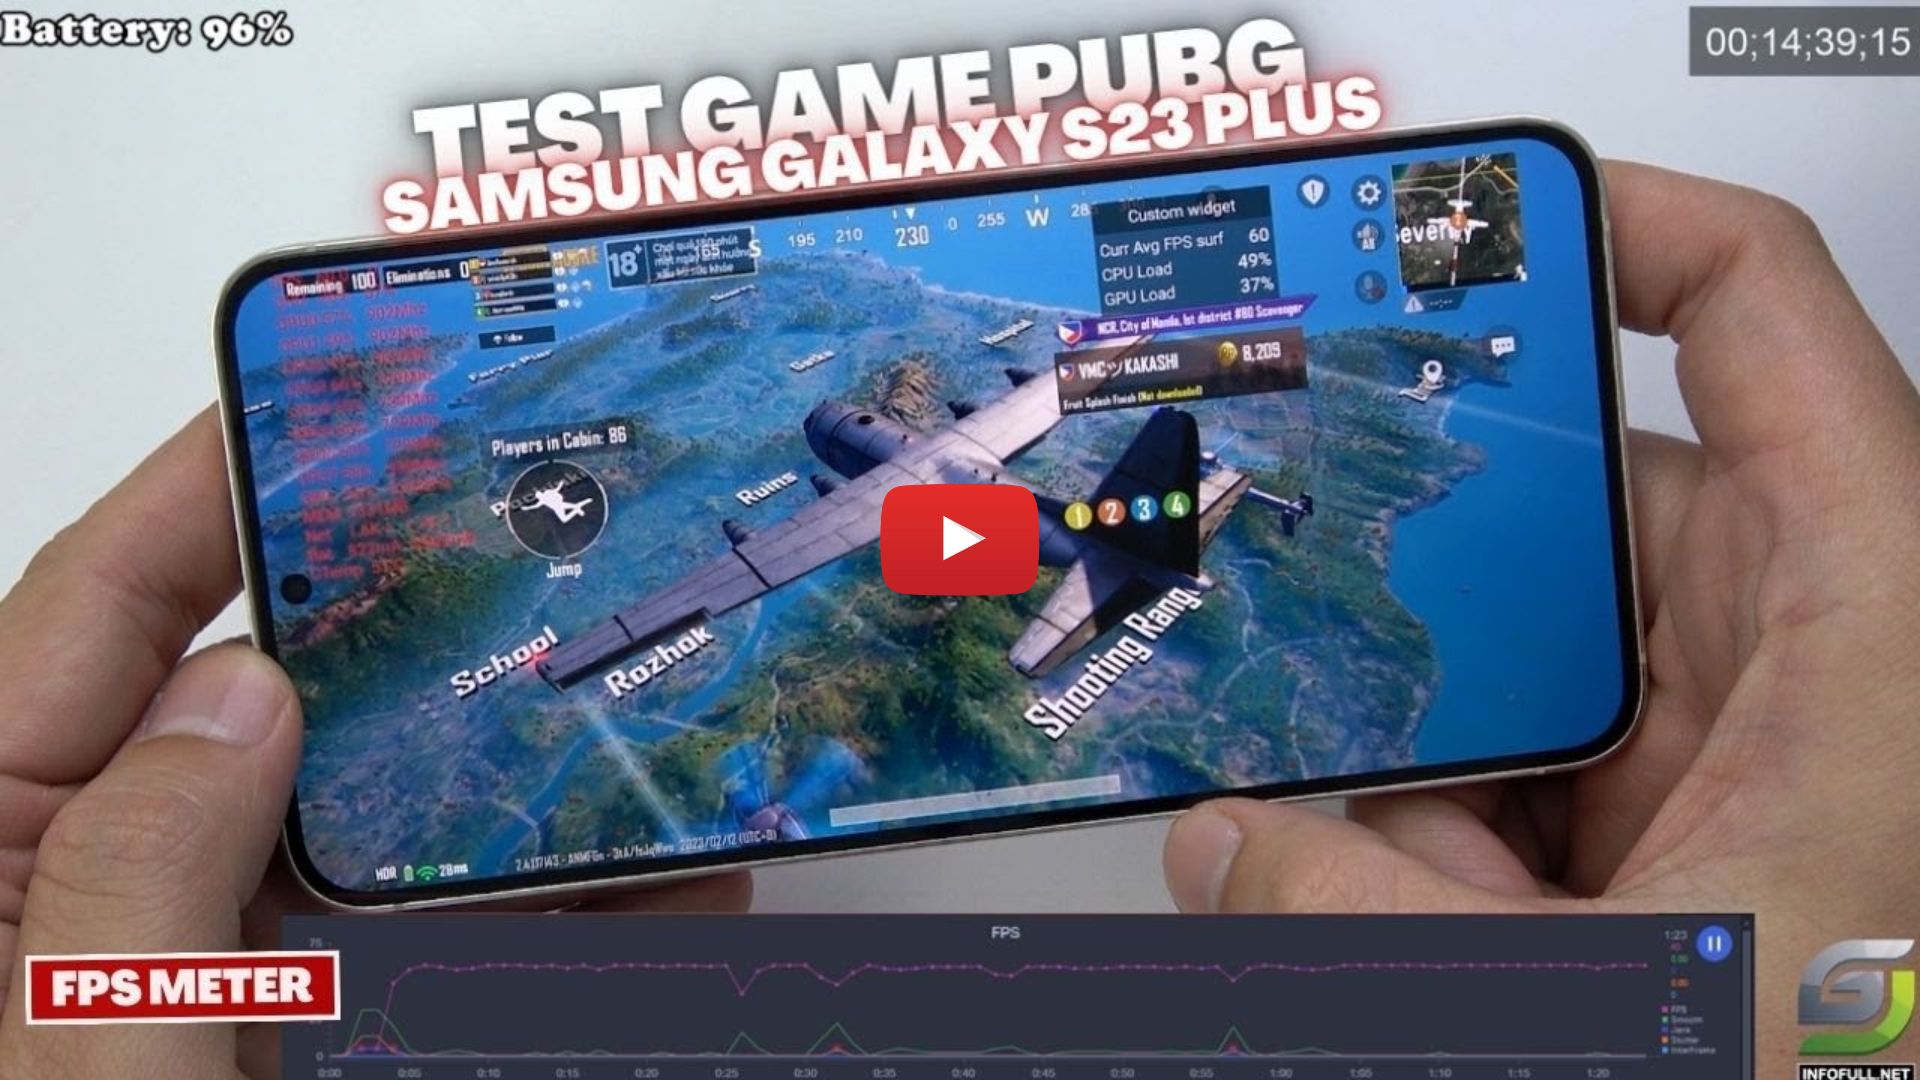 Regenjas vals Toegepast Samsung Galaxy S23 Plus test game PUBG Mobile - GSM FULL INFO %